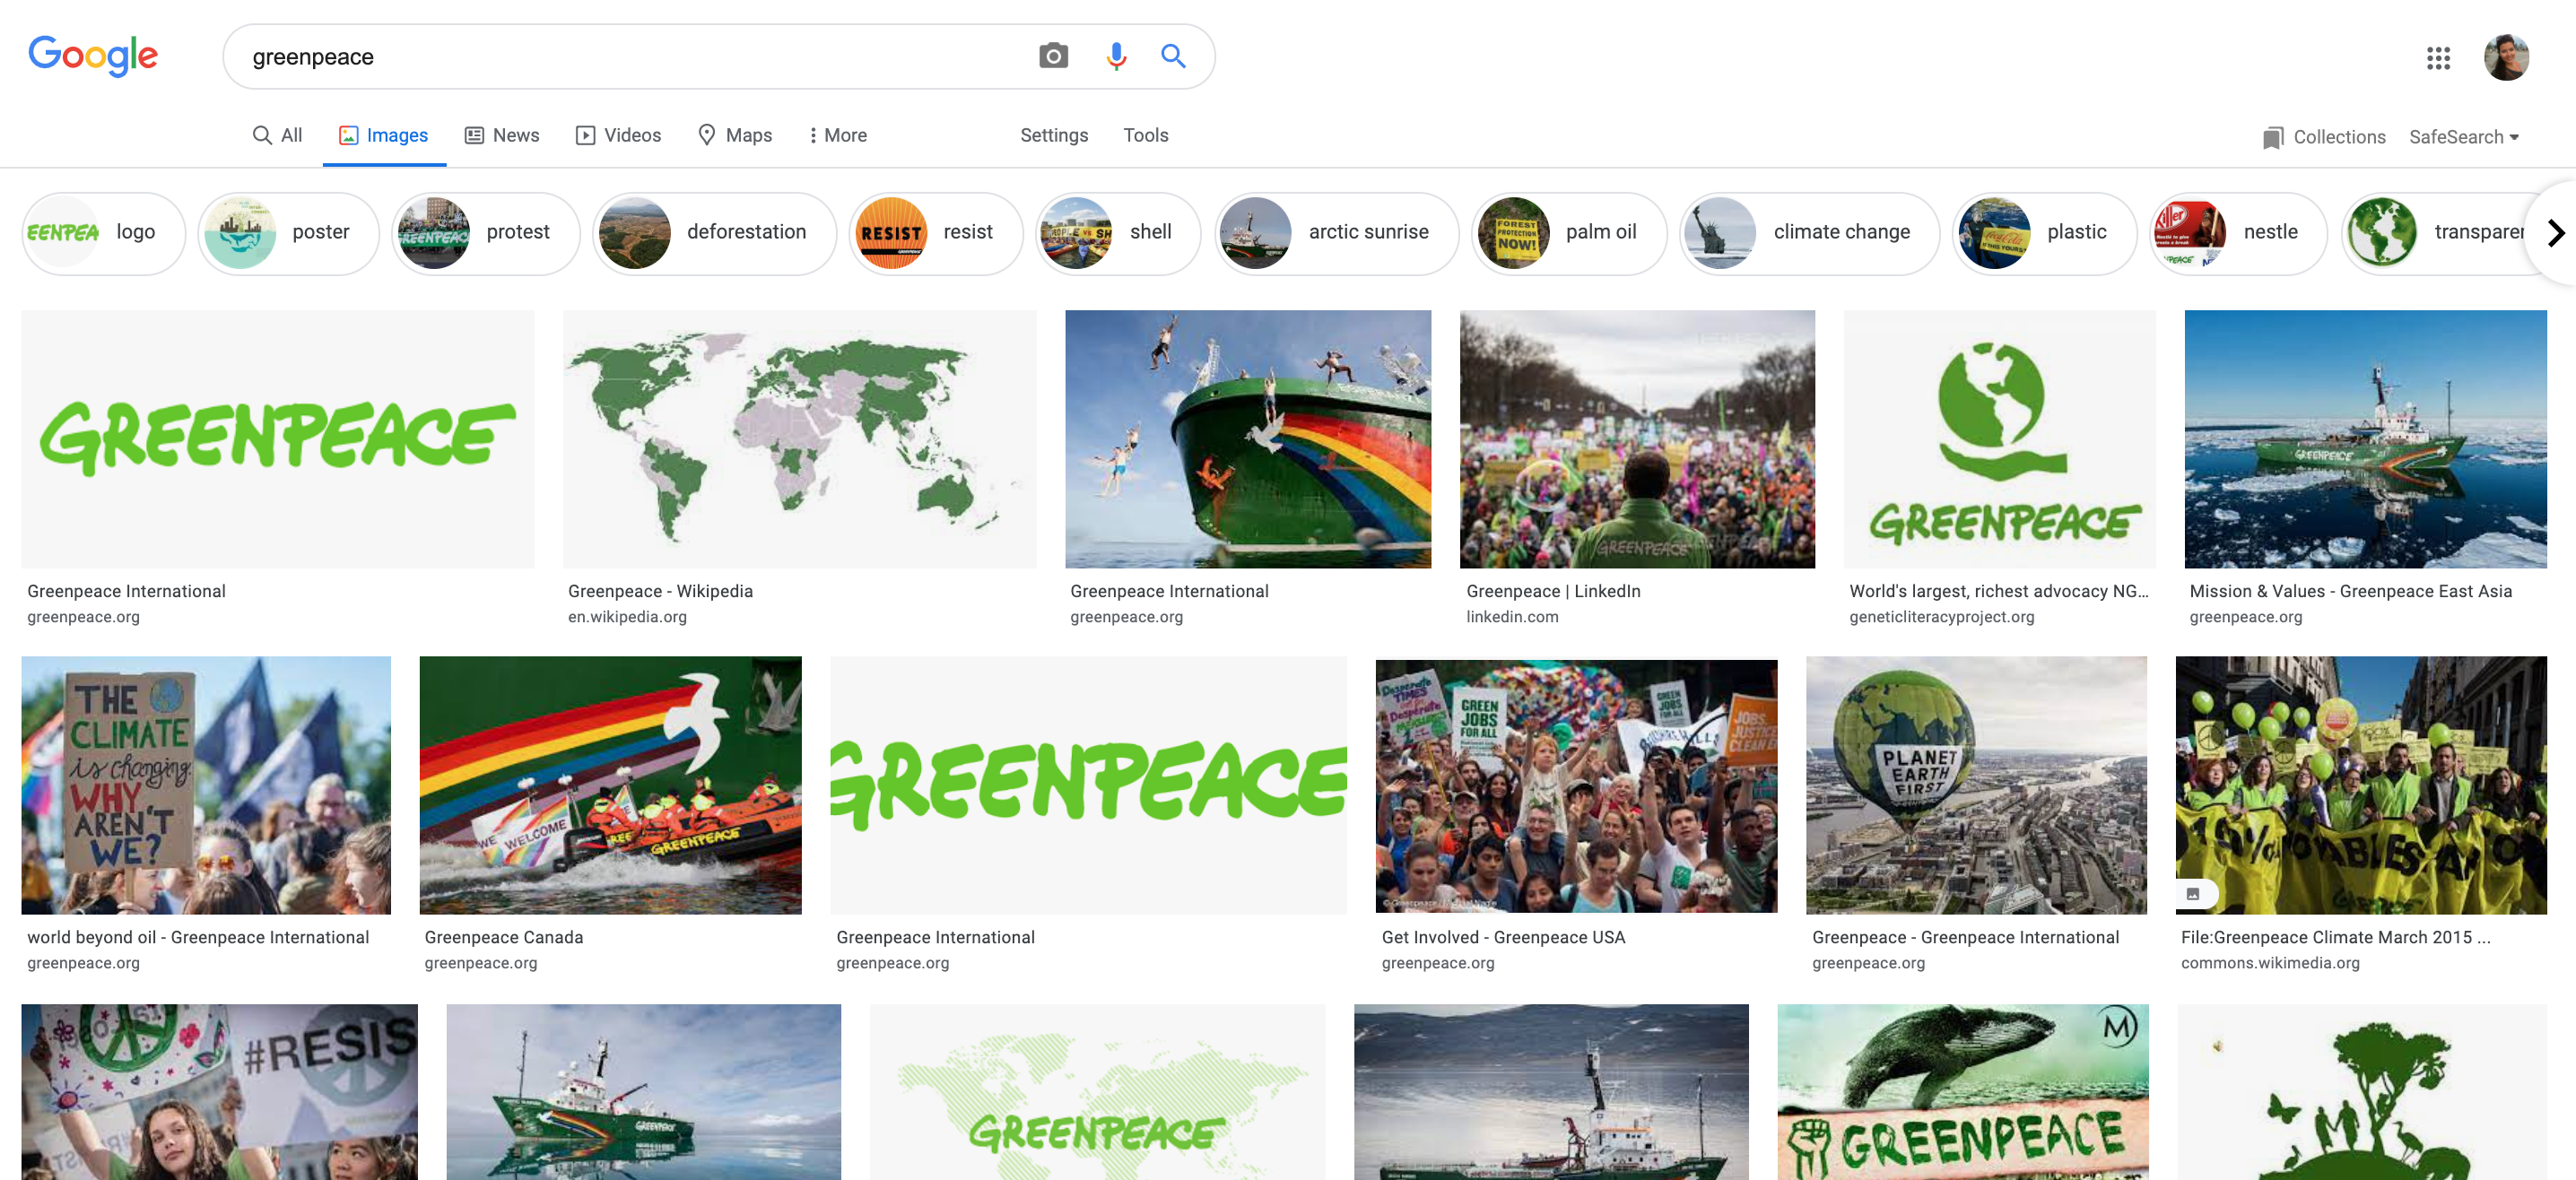 Greenpeace Google image results.